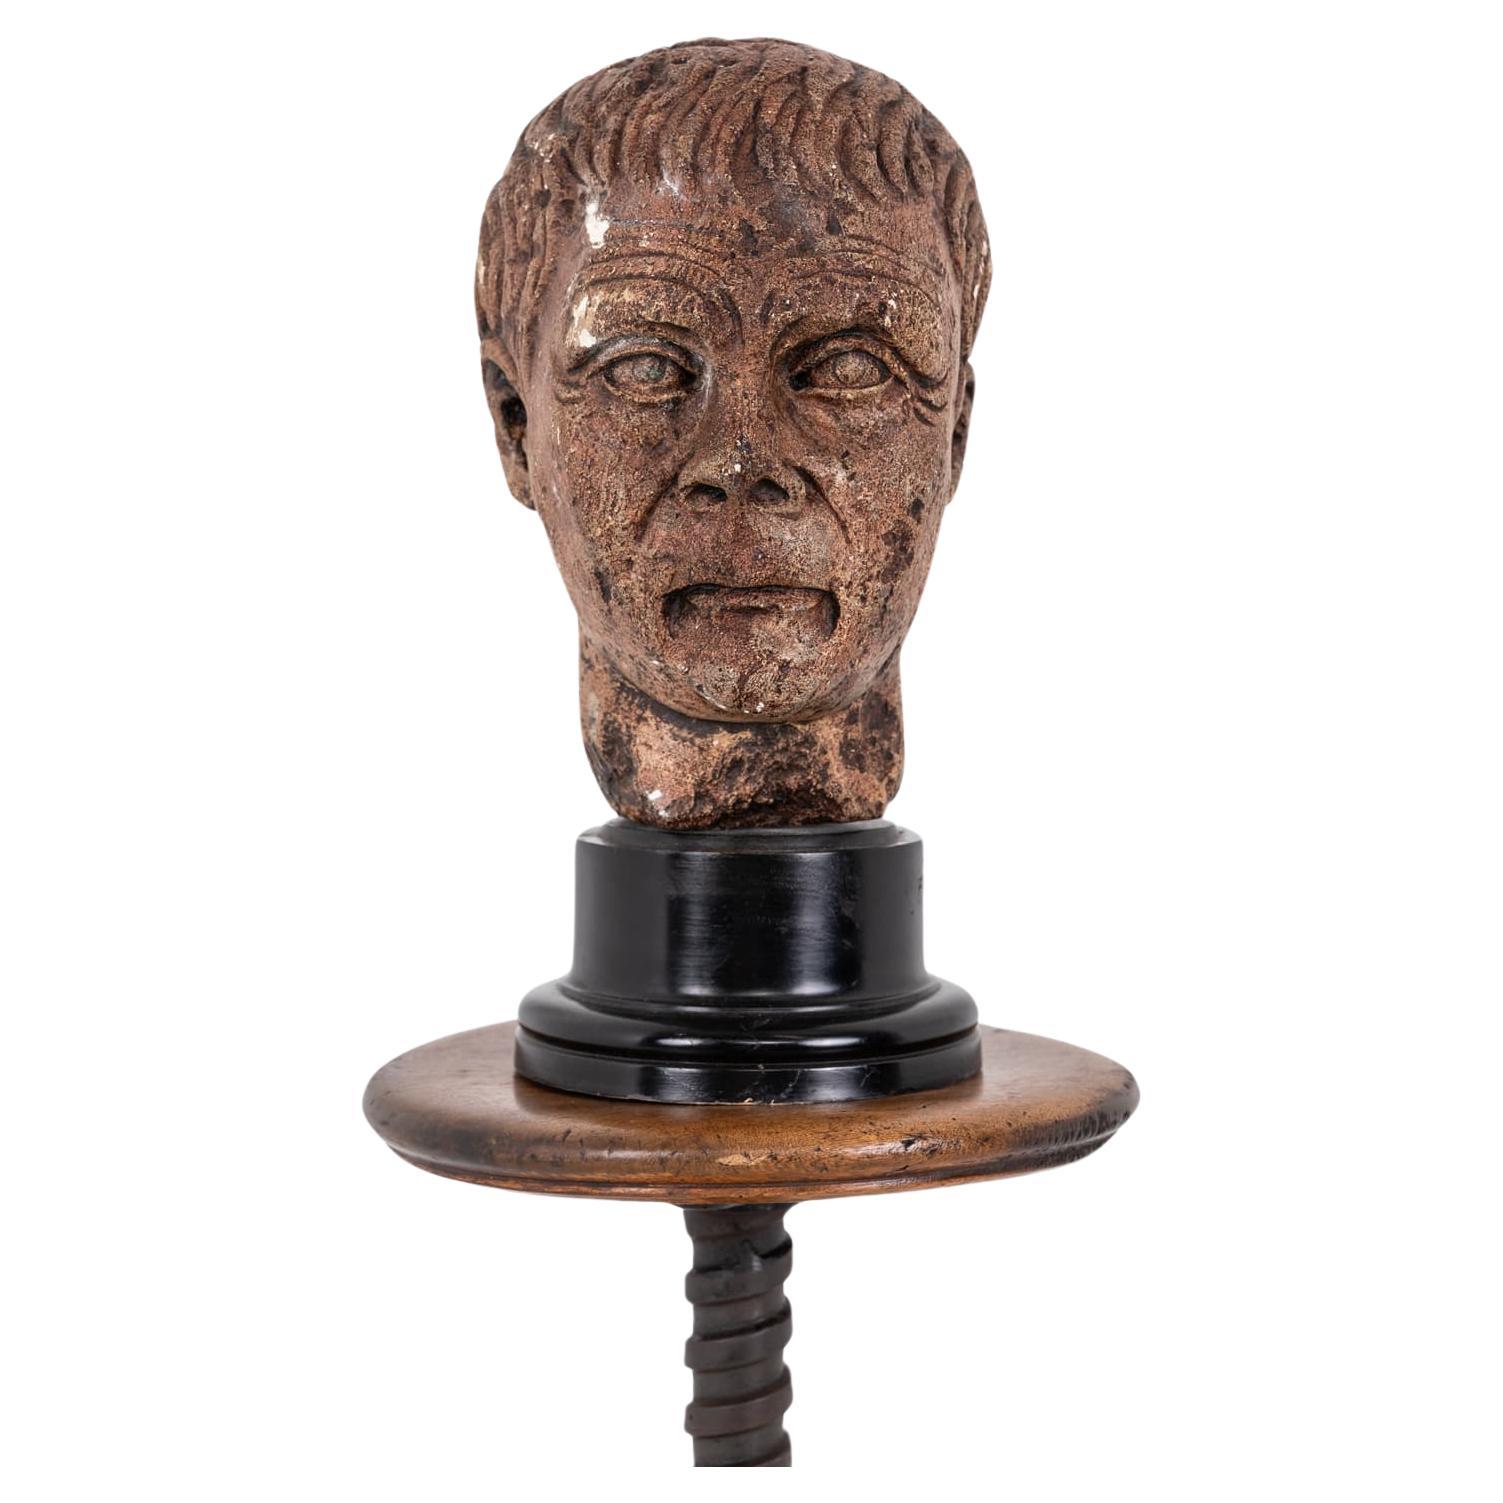 Vintage Mid-Century Male Head Gentleman Bust Statue on Wooden Stand